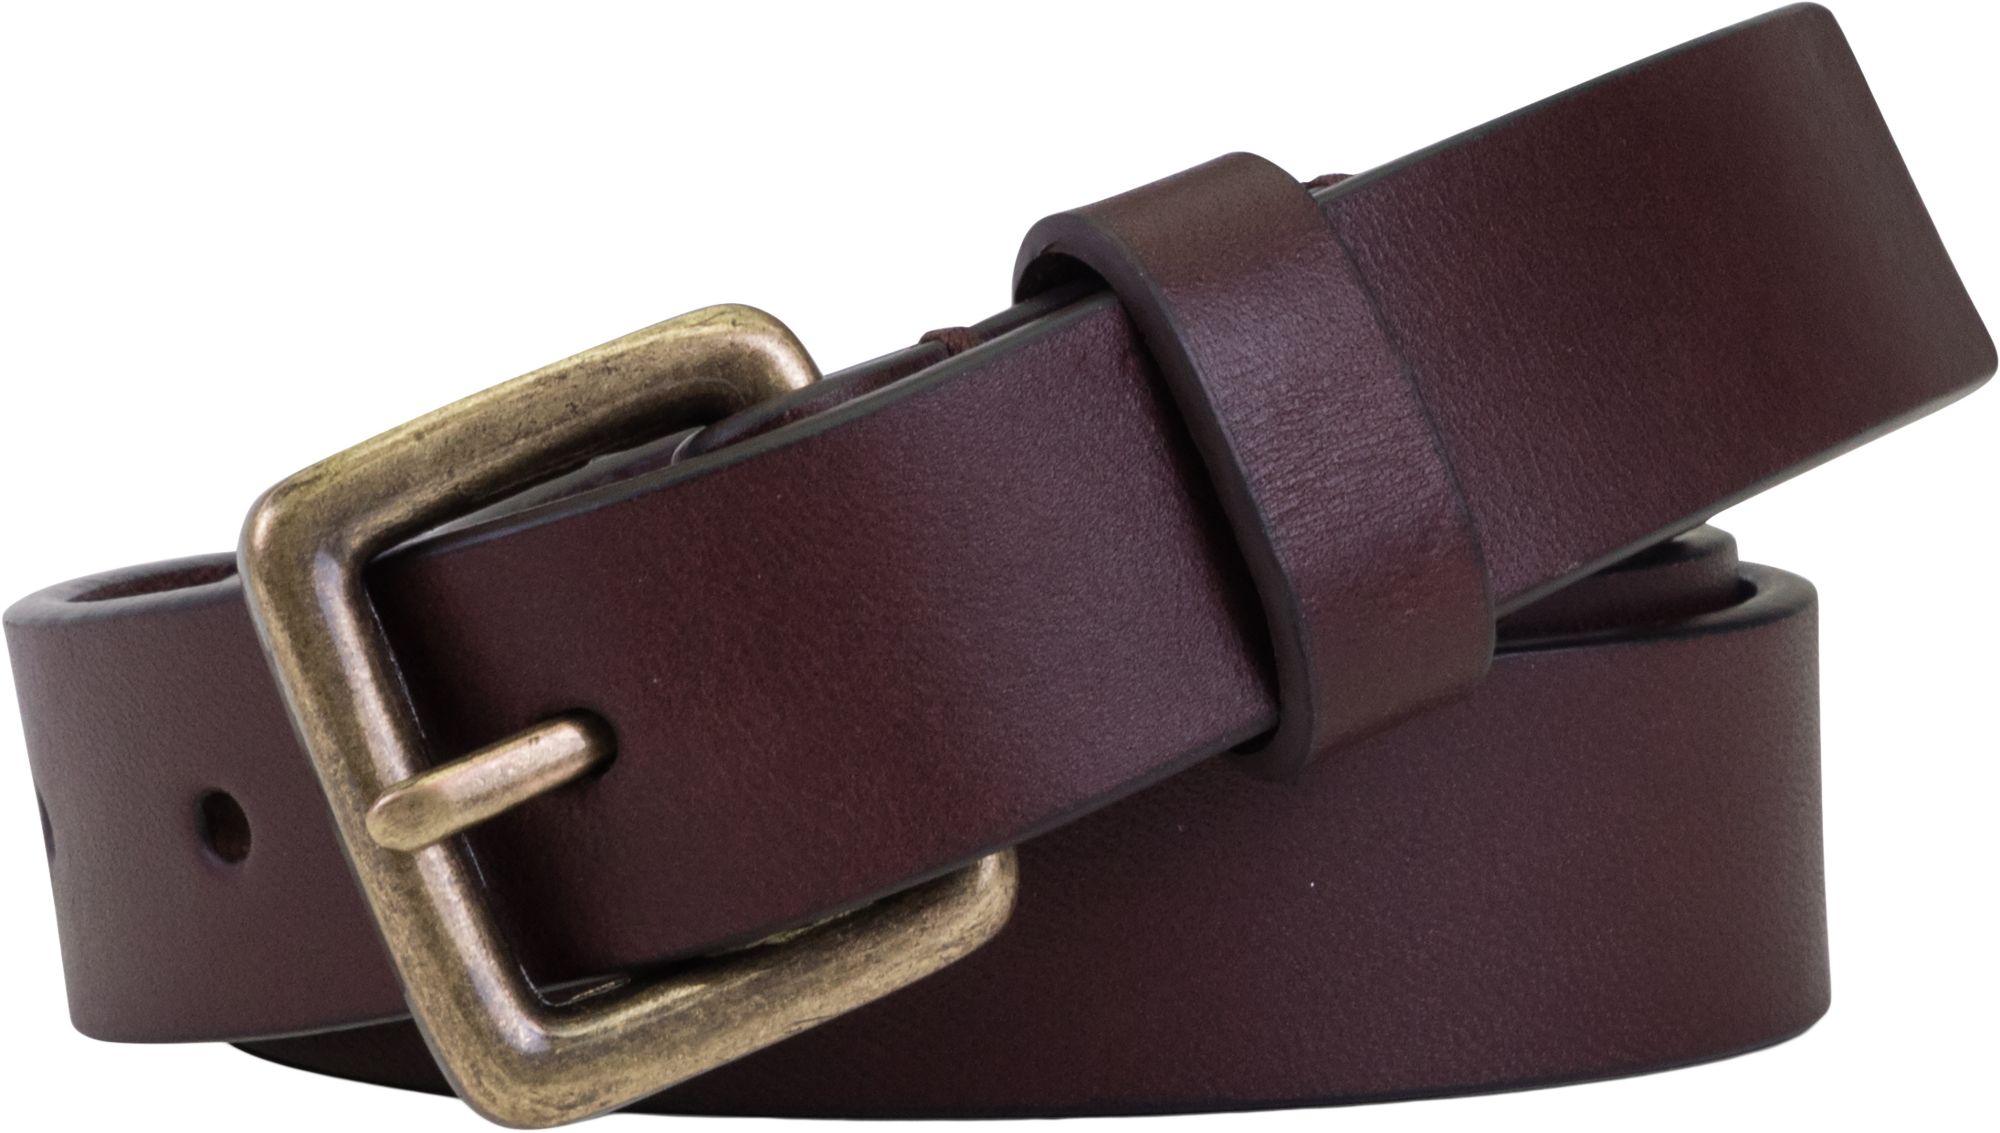 Timberland Women's 30mm Criss Cross Leather Belt Martini Olive / Medium